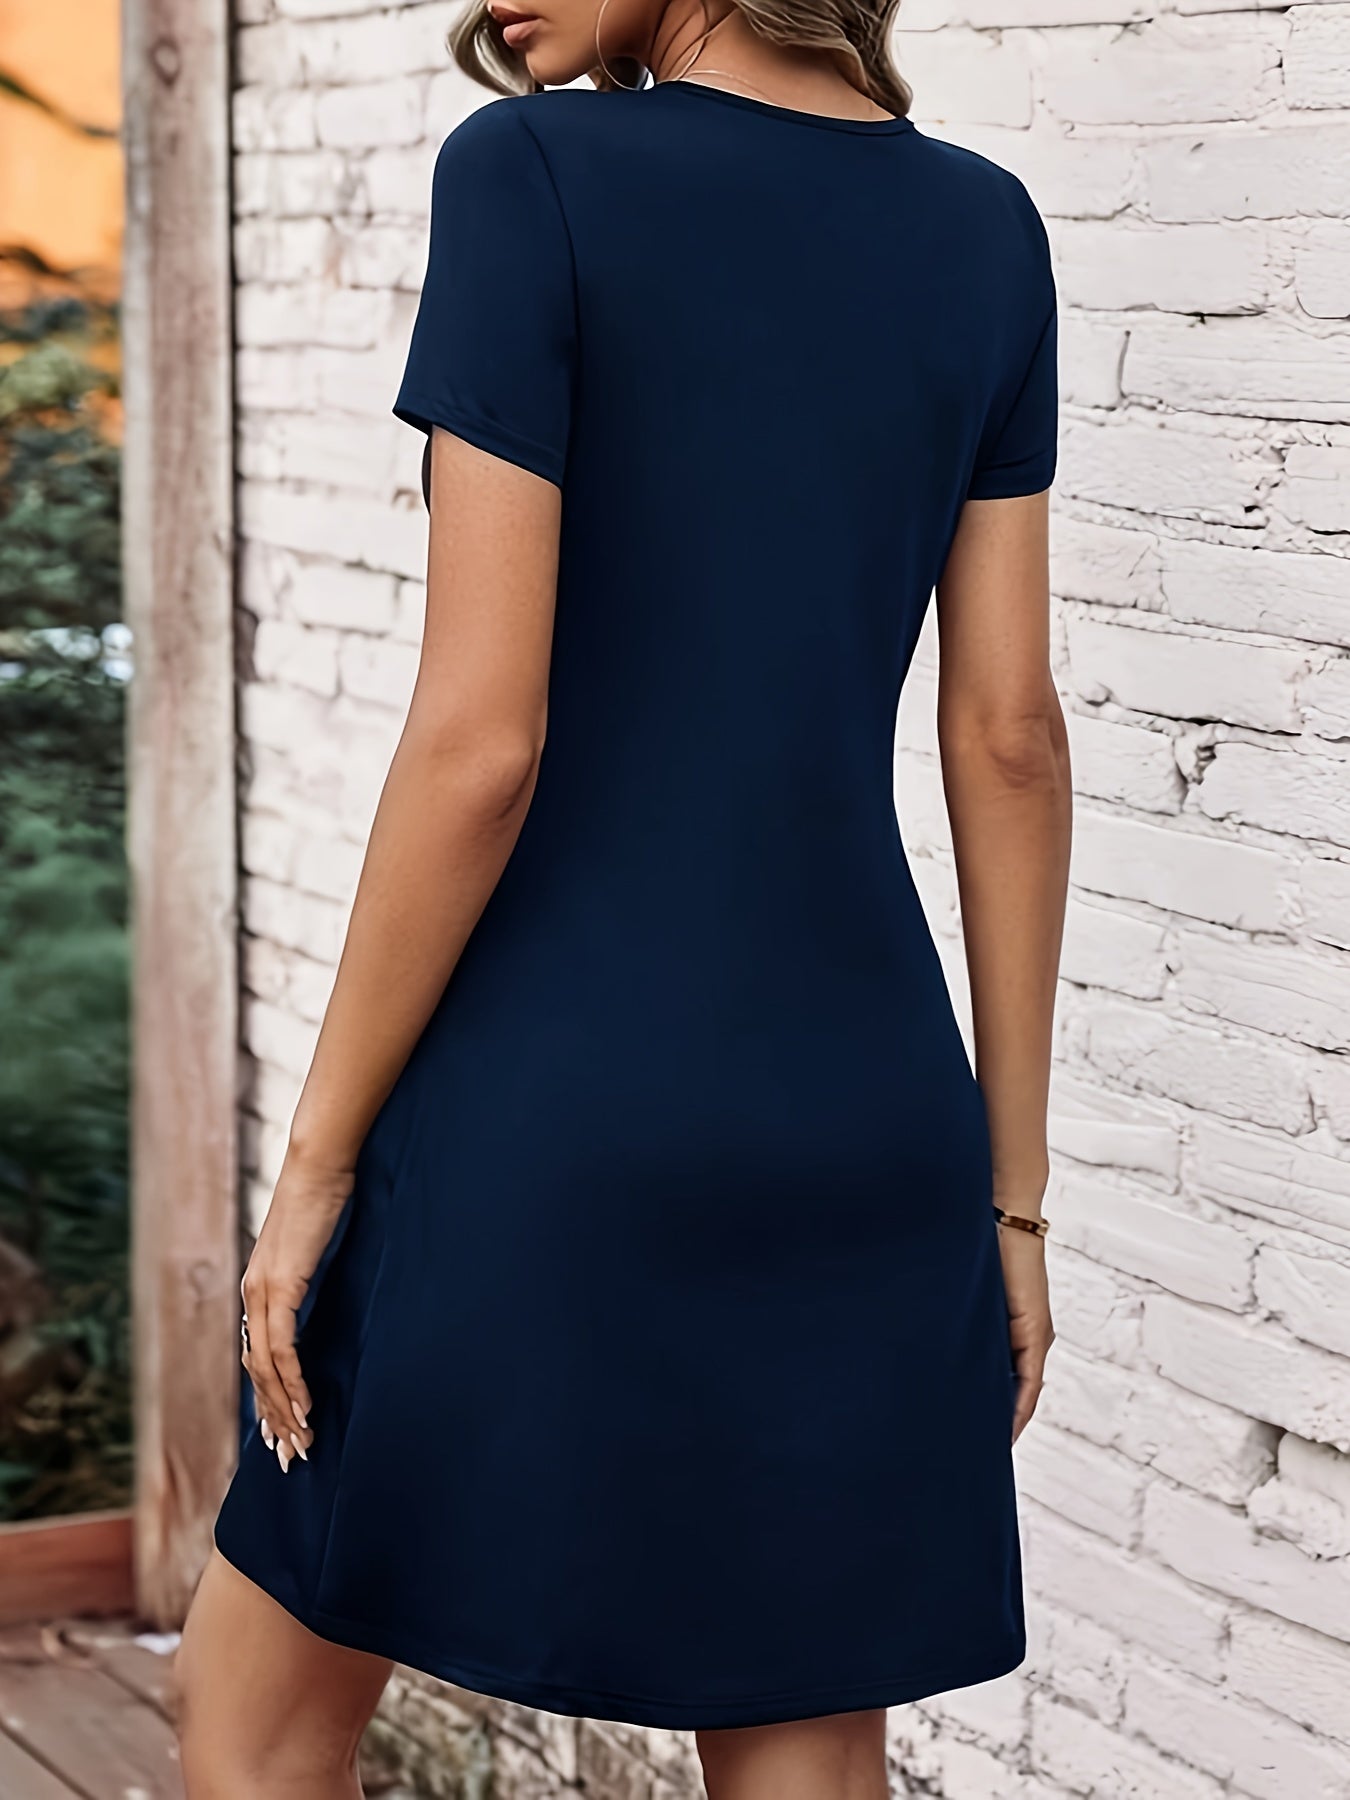 Antmvs Solid Keyhole Mini Dress, Elegant Crew Neck Short Sleeve Dress, Women's Clothing